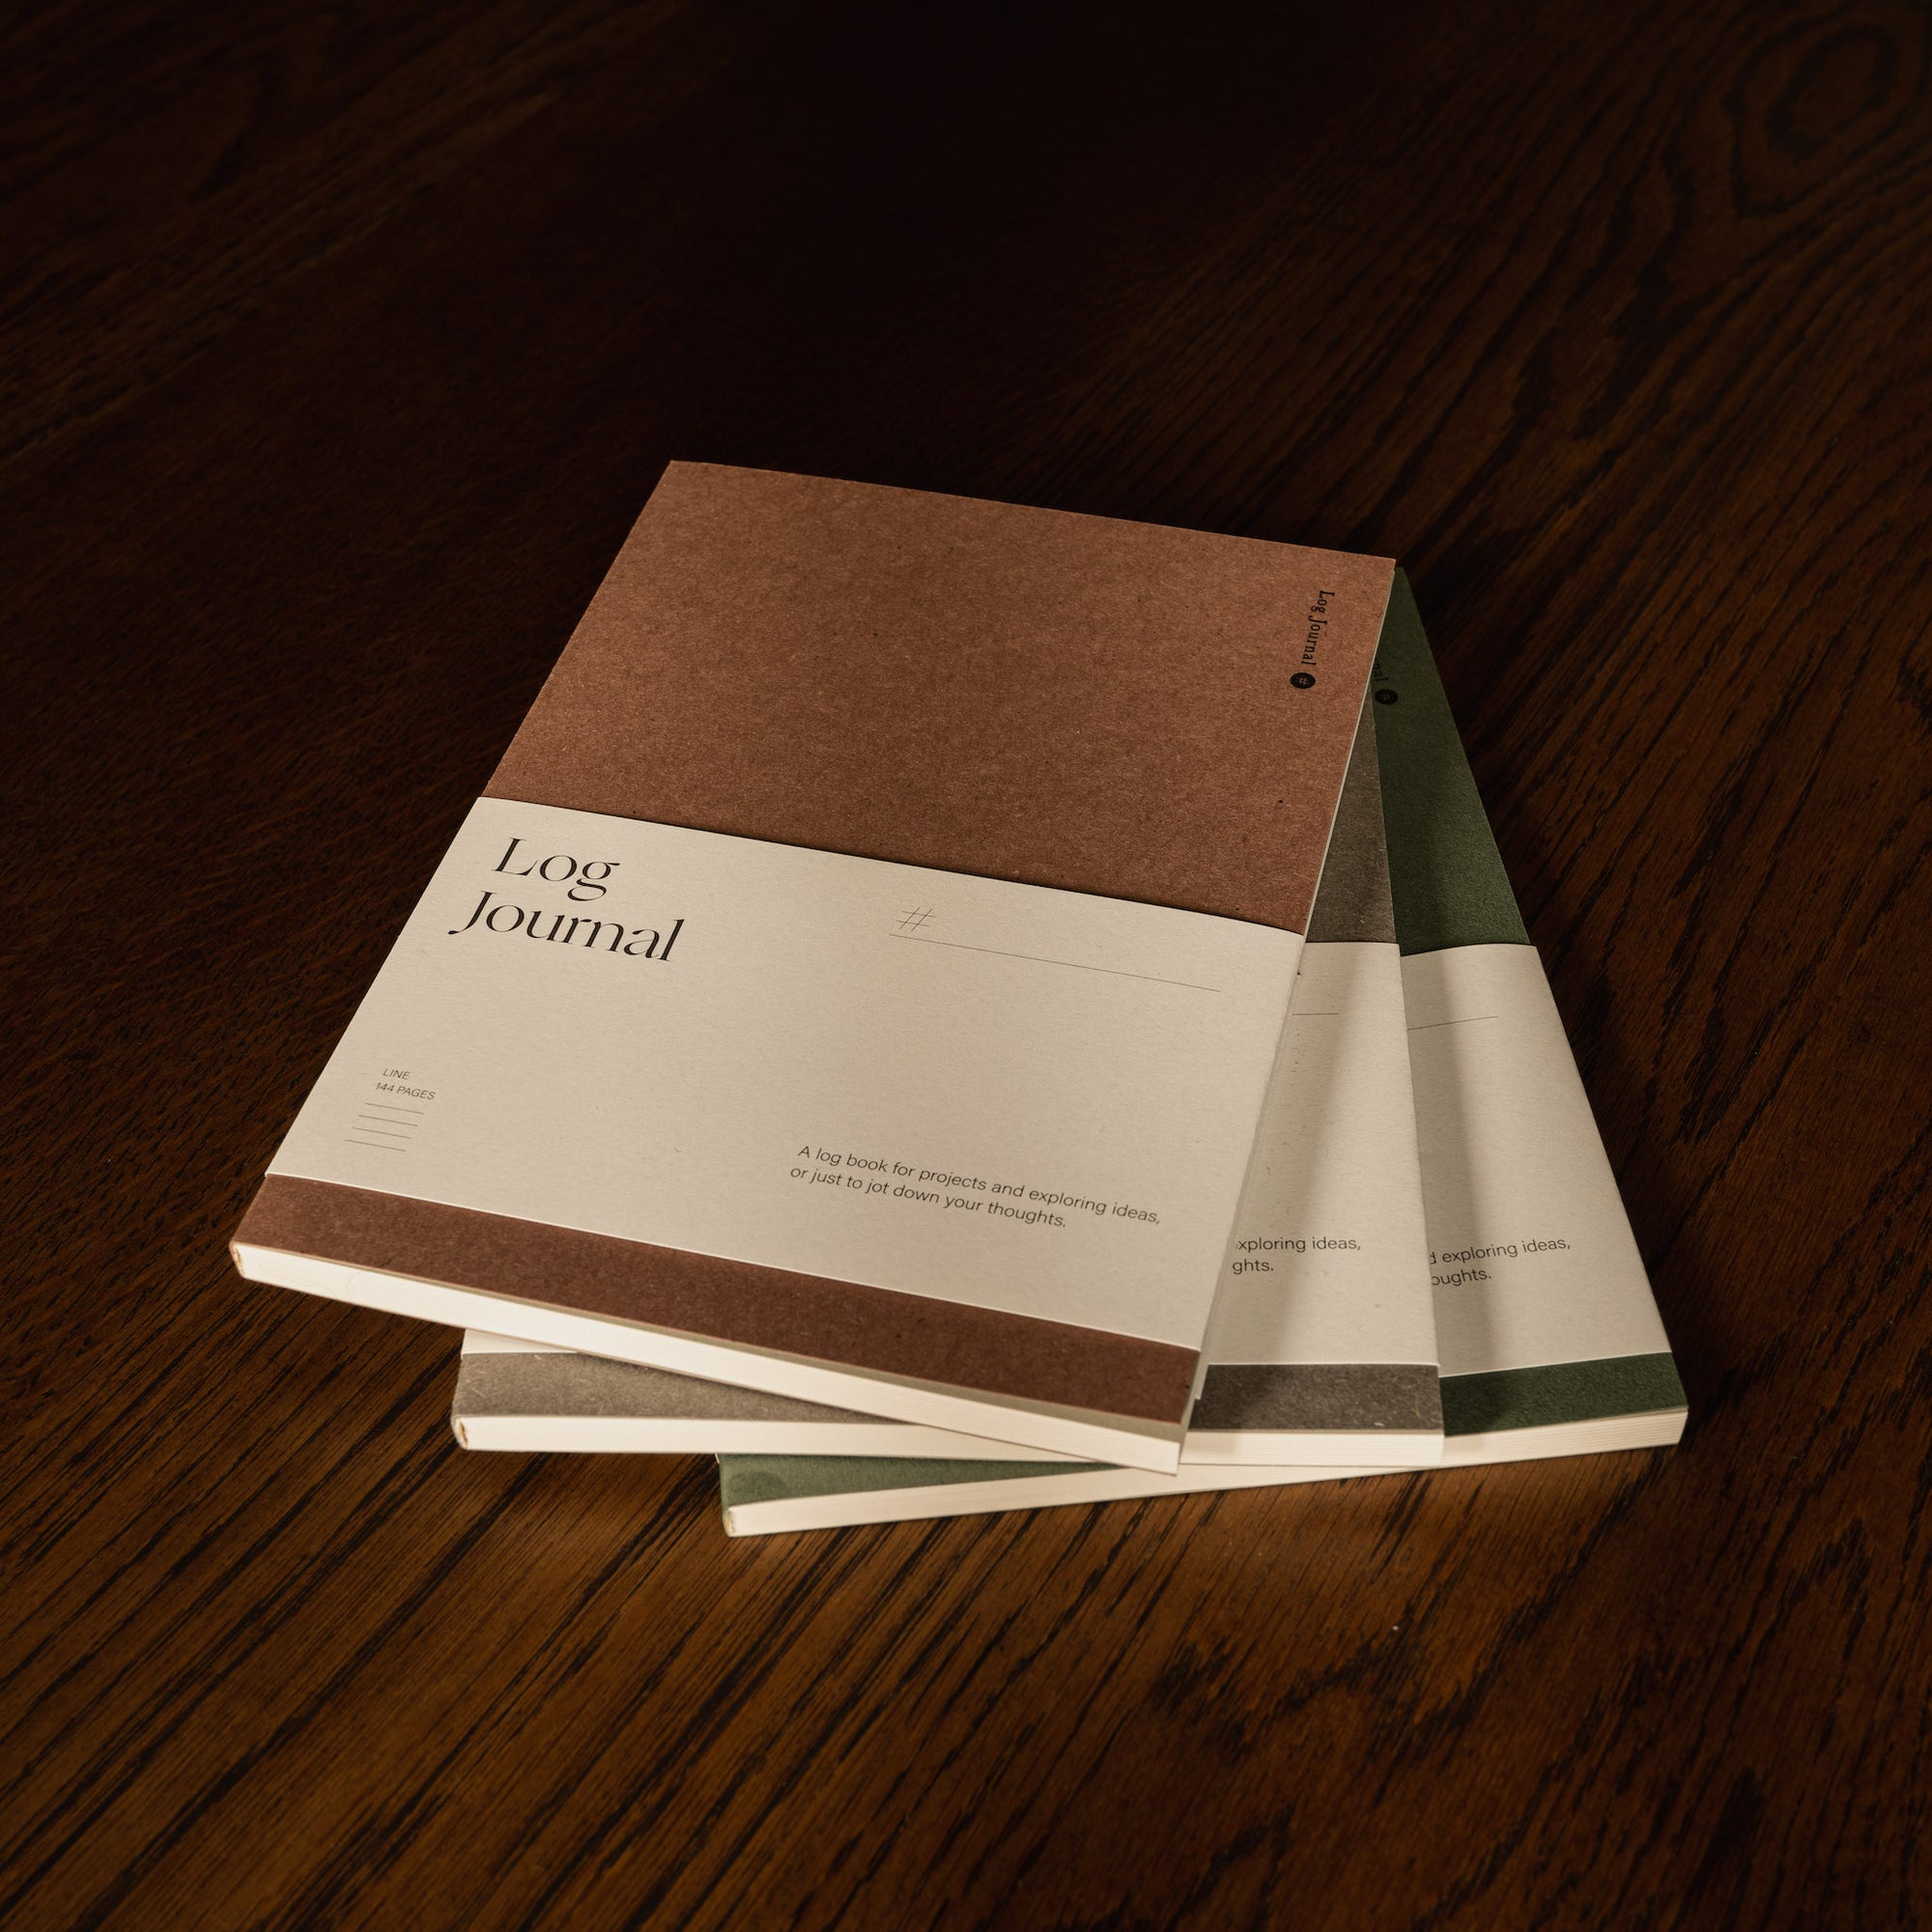 Log Journal - Ruled Paper